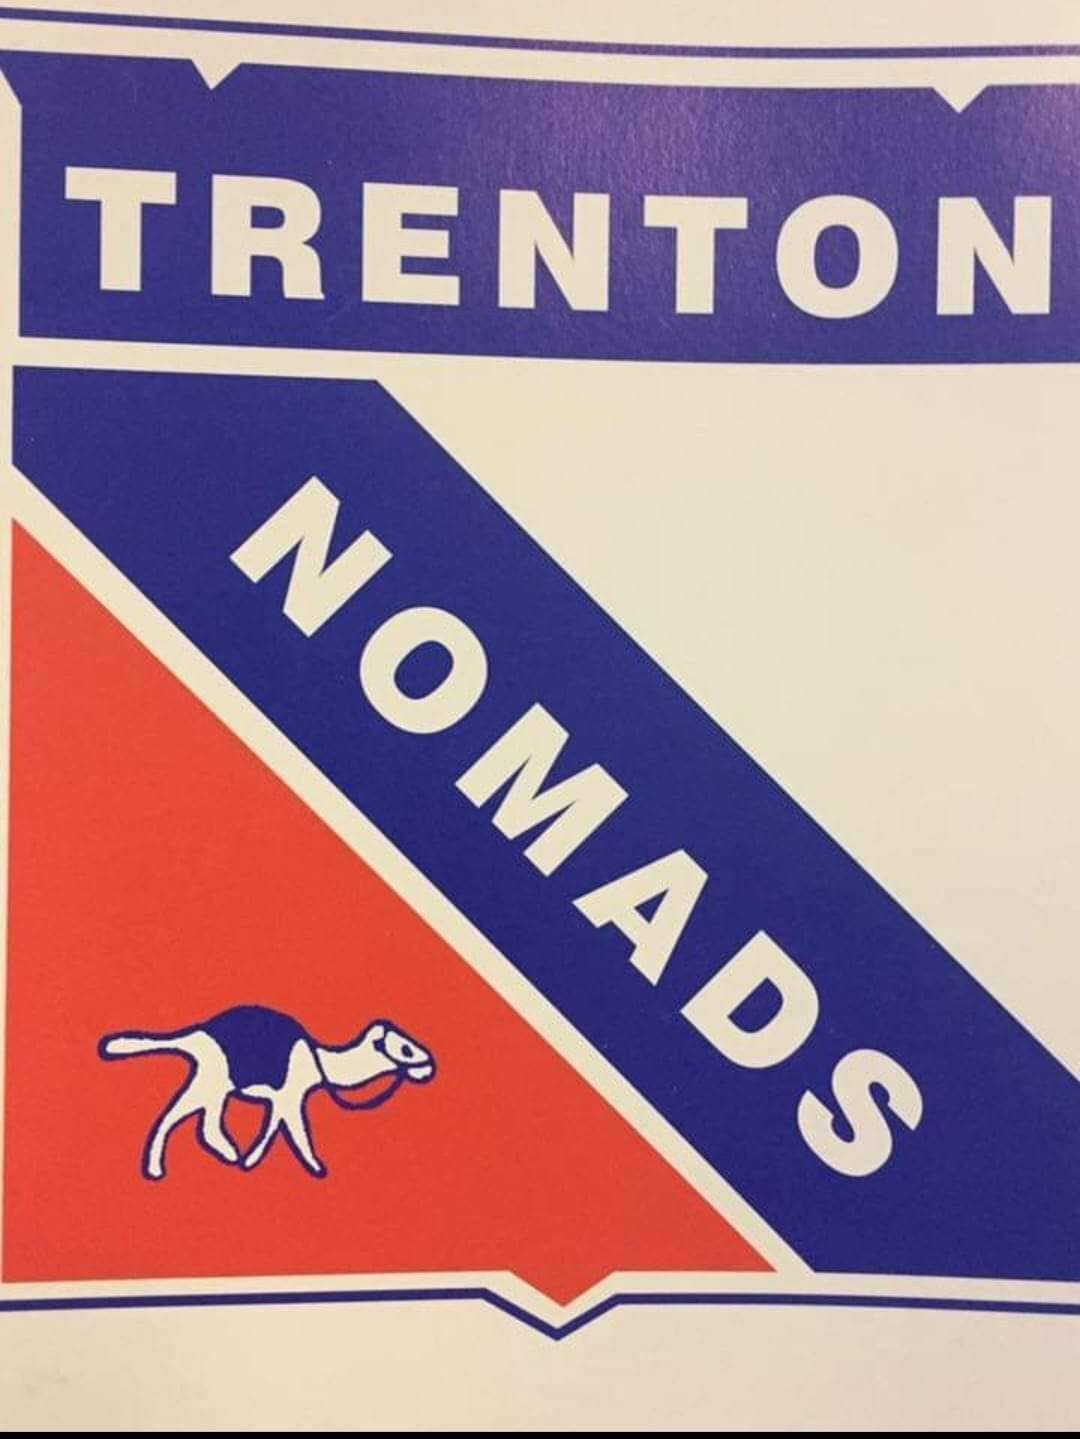 Trenton Nomads